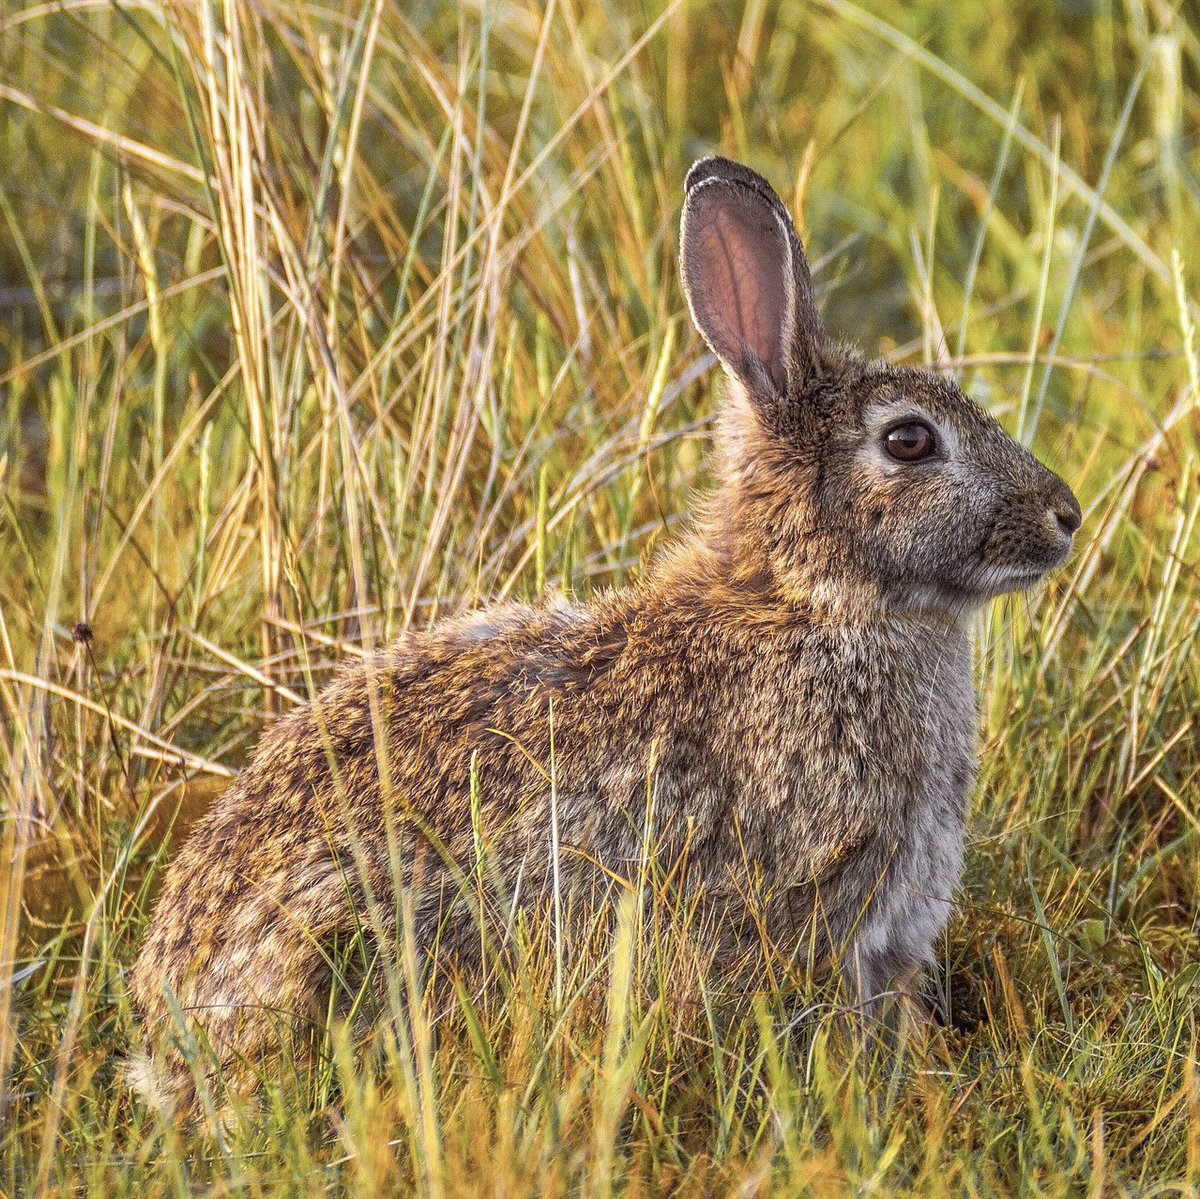 Hoppy Easter! 🐰
#hoppy #bunny #rabbit #bunnyrabbit #easterbunny #easterrabbit #eastergrass #wildanimal #wildlife #nature #spring #springlife #springhunters #springhunt #springhunting #whatgetsyououtside #outdoorchurch #wildernessculture #wildernesslifestyle #lifehappensoutdoors